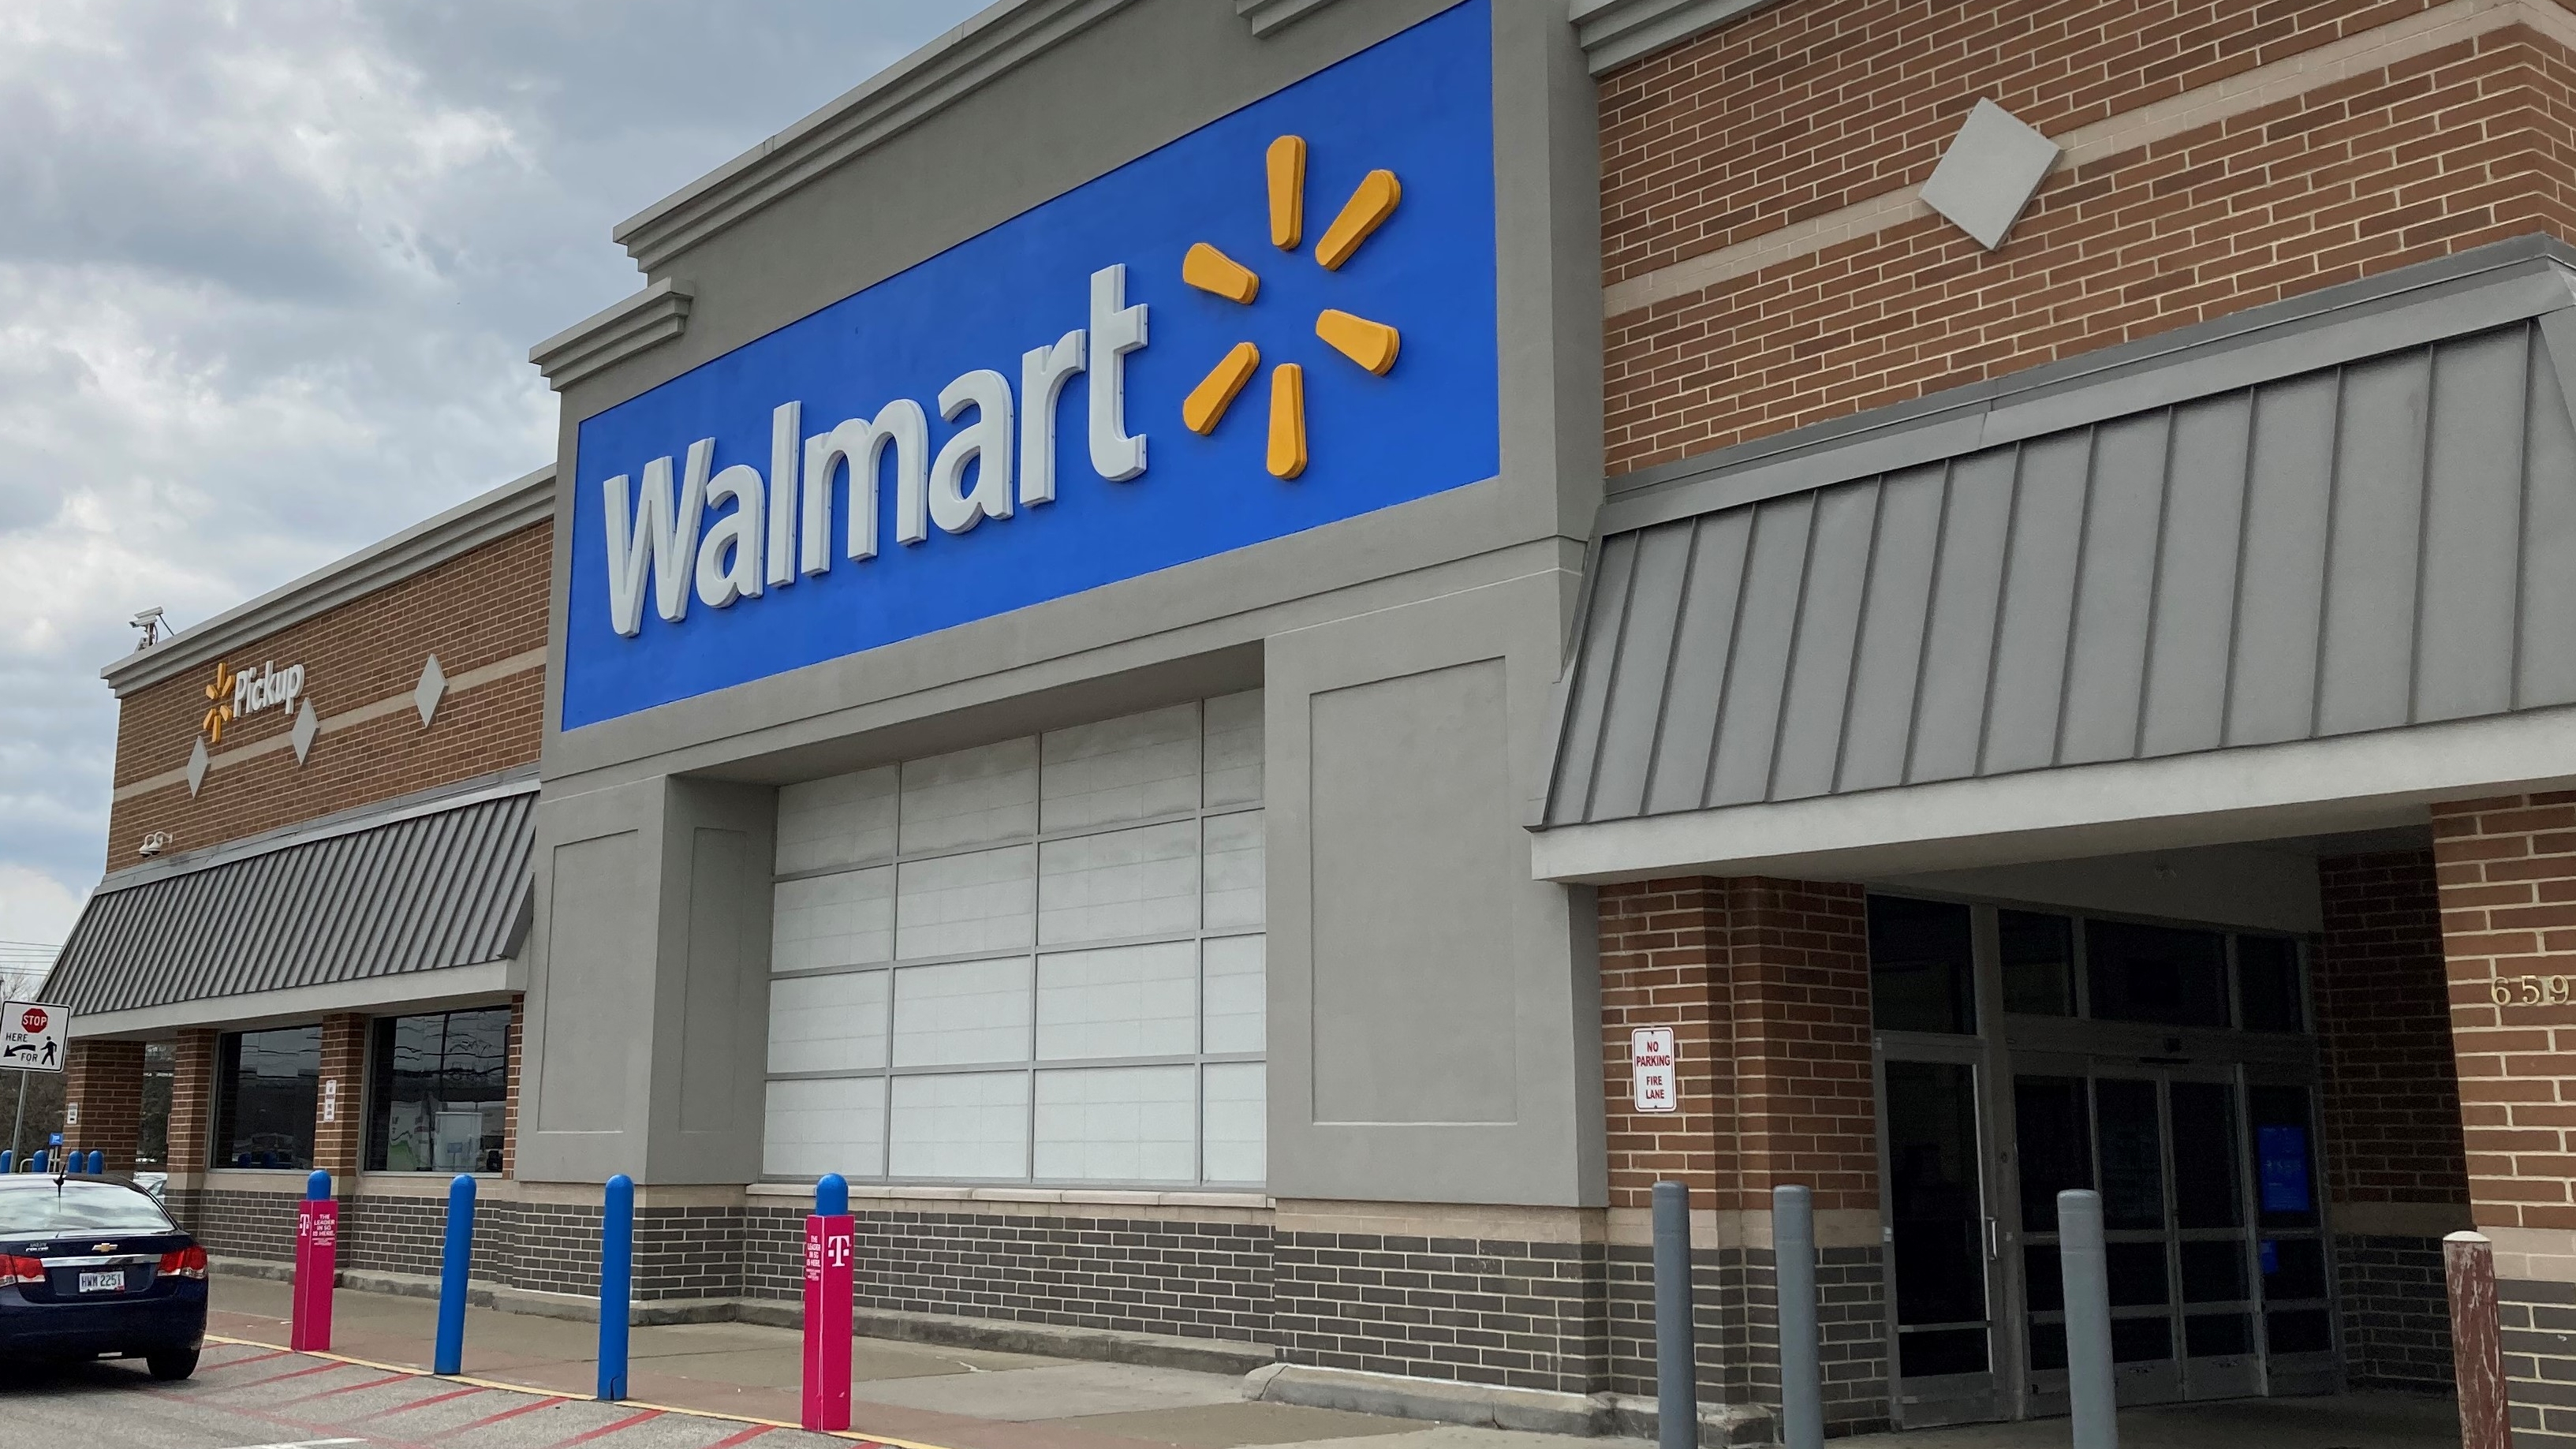 Walmart+ Weekend deal: The $99 Gourmia air fryer is just $59